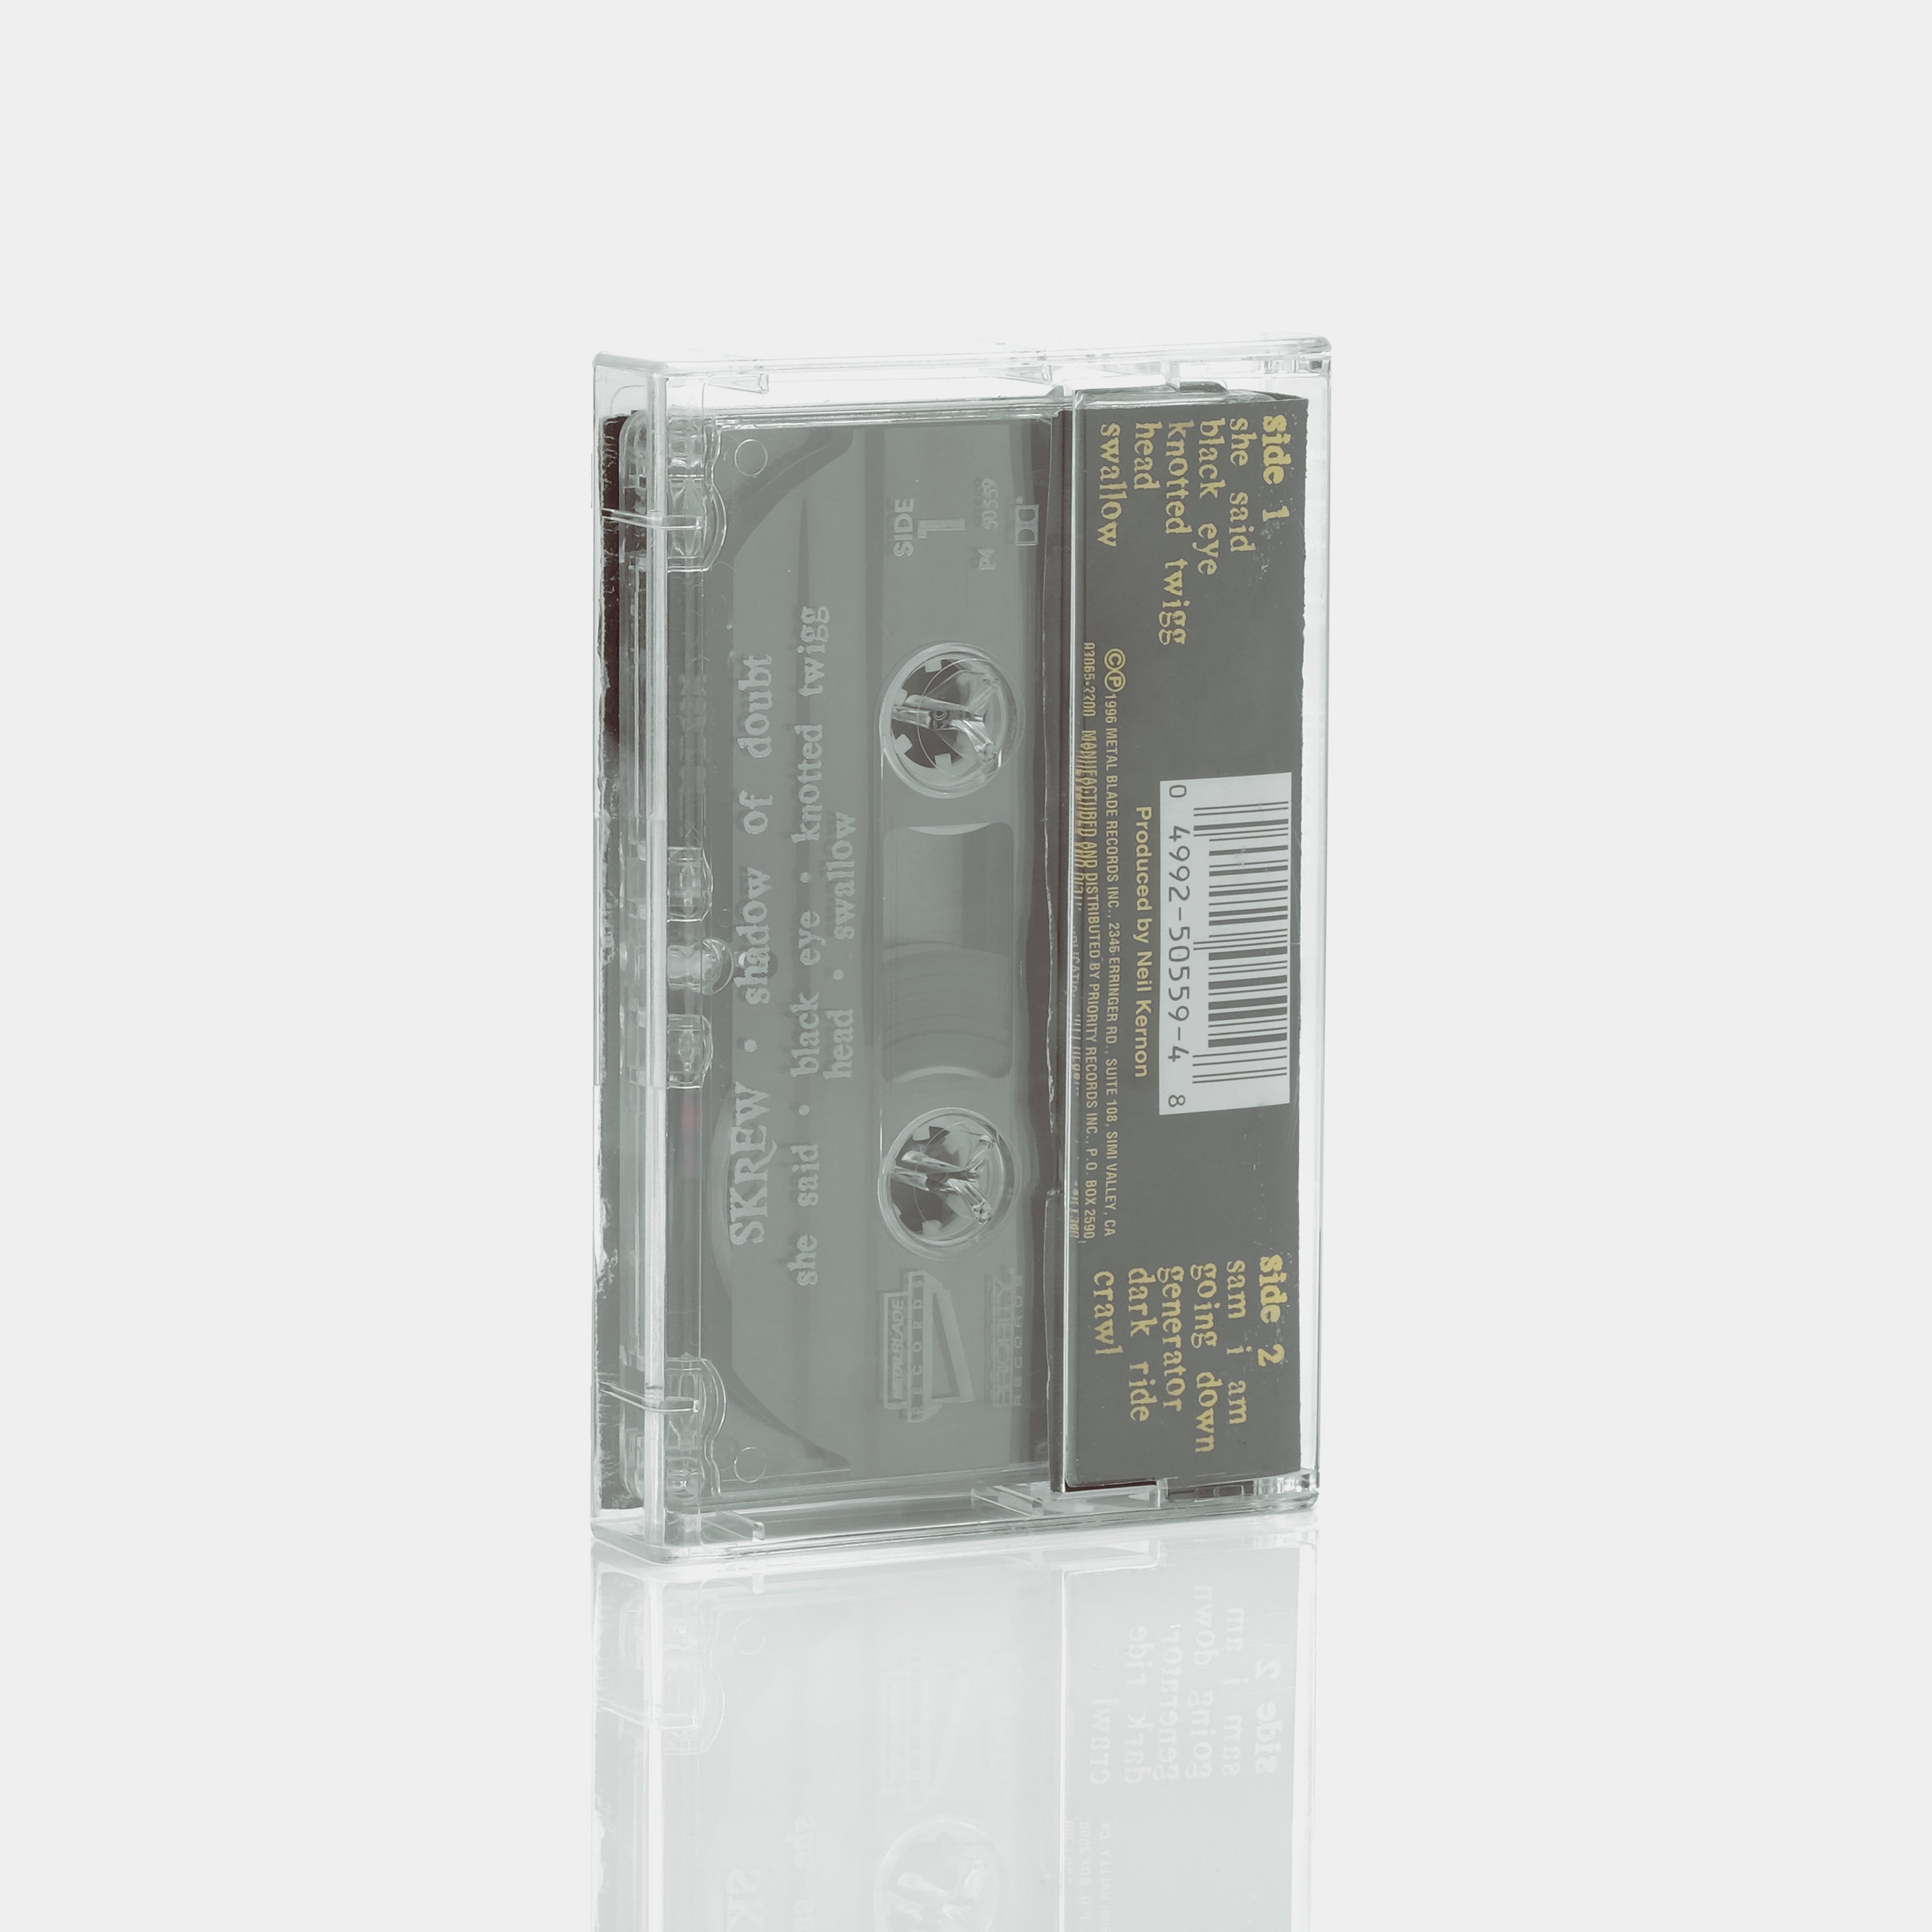 Skrew - Shadow Of Doubt Cassette Tape